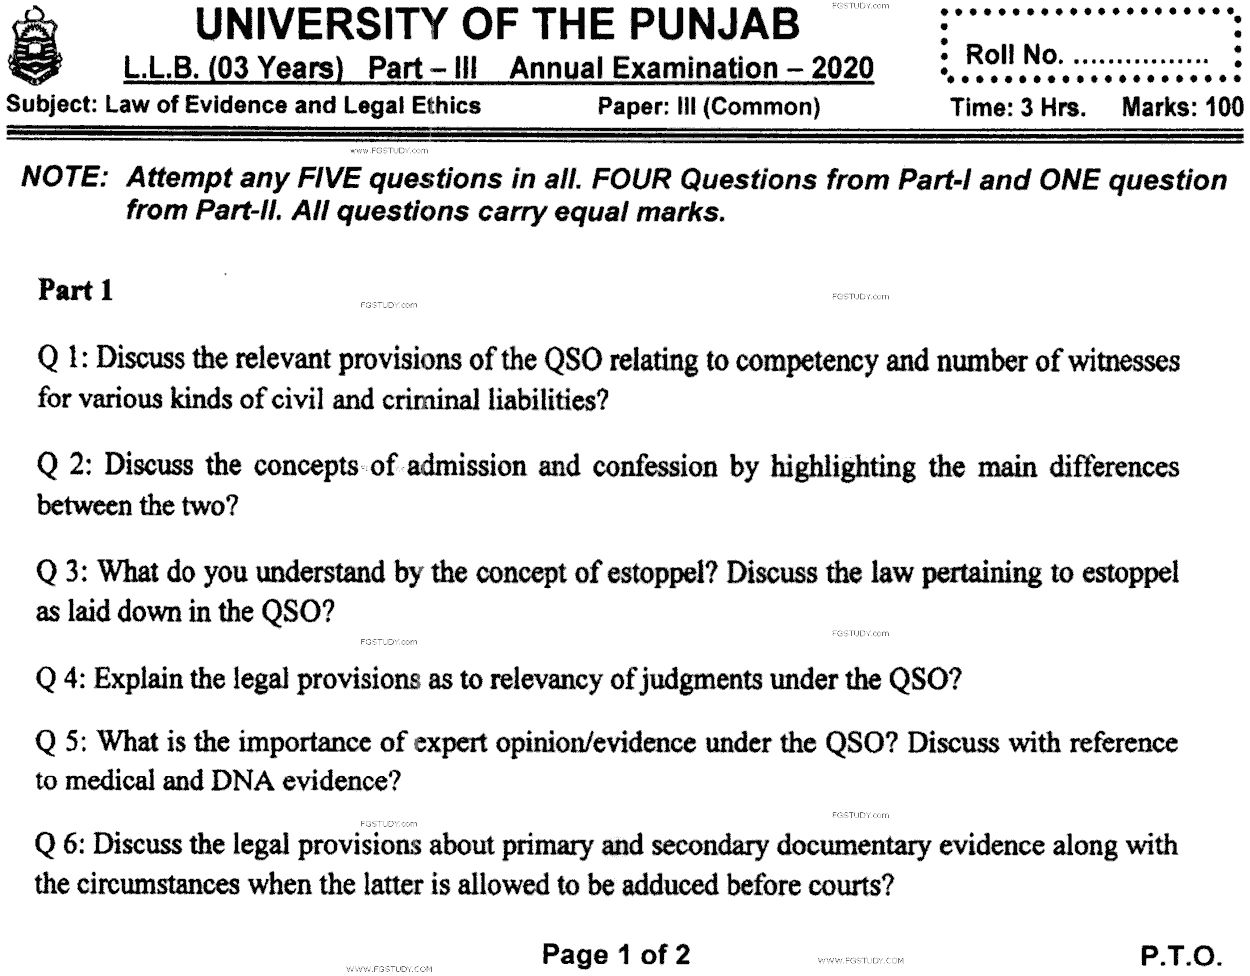 LLB Part 3 Law Of Evidence Legal Ethics Past Paper 2020 Punjab University